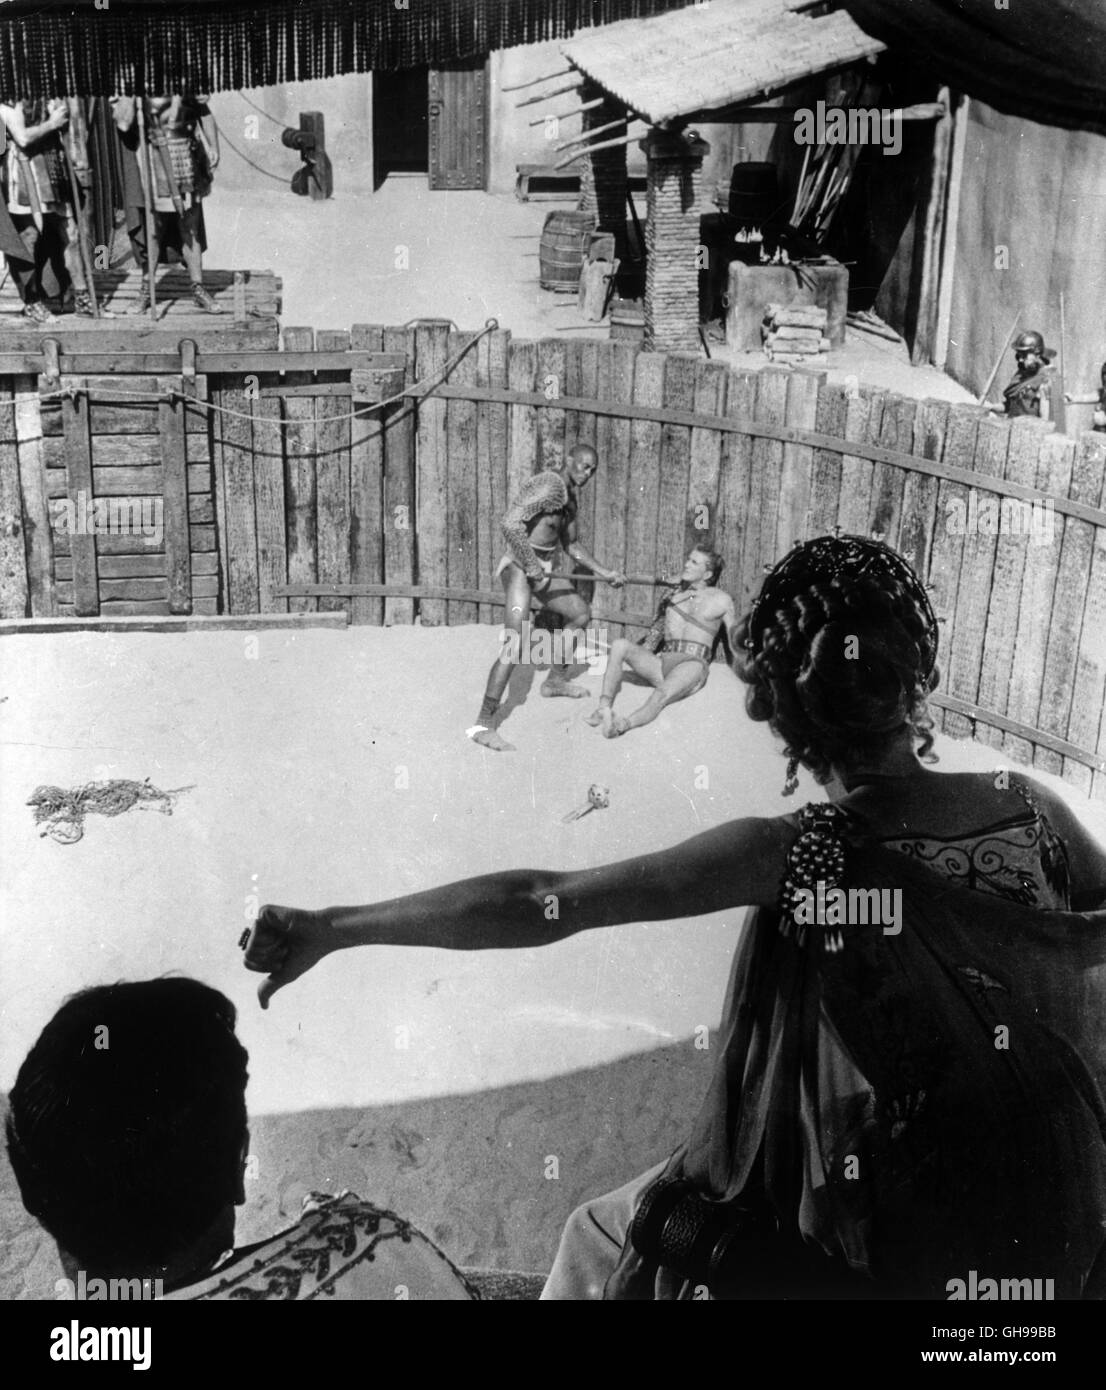 SPARTACUS / Spartacus USA 1960 / Stanley Kubrick Szene vom Gladiatorenkampf mit WOODY STRODE (Draba), KIRK DOUGLAS (Spartacus) Regie: Stanley Kubrick aka. Spartacus Stock Photo